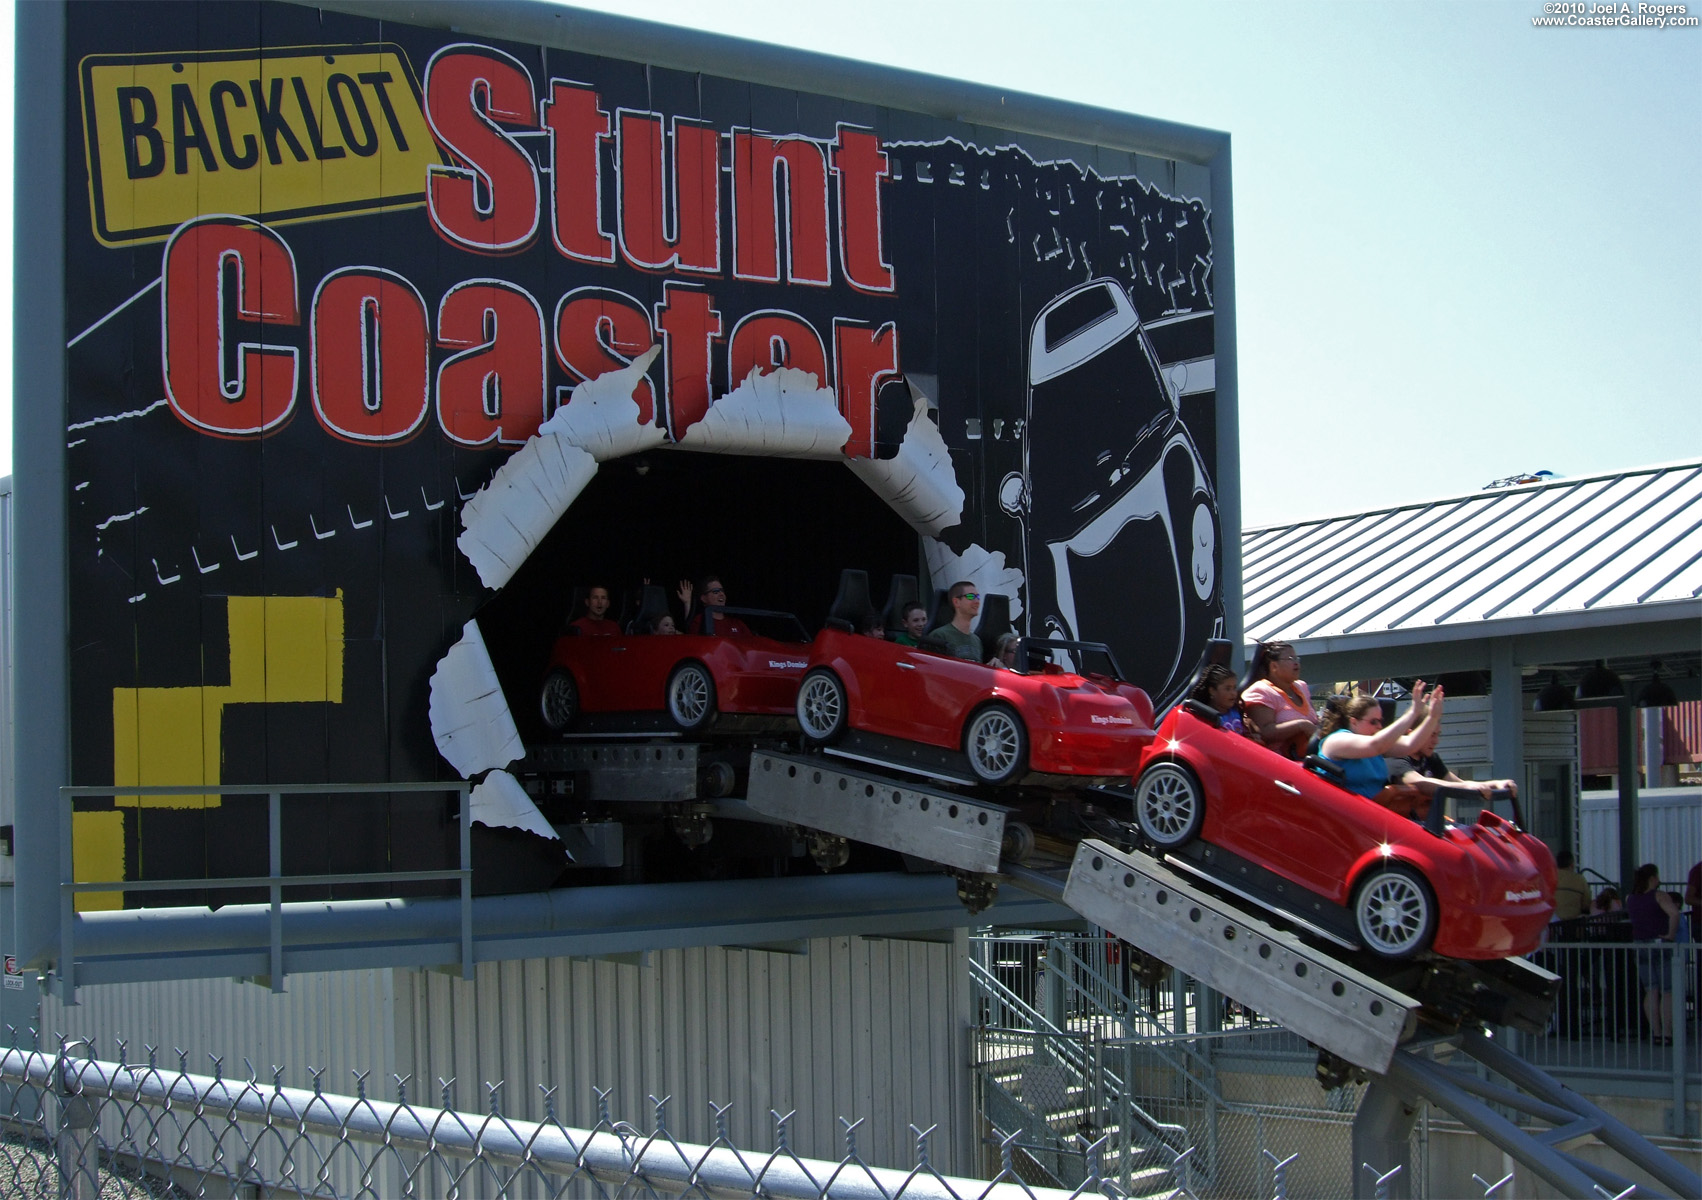 The Italian Job Turbo Coaster - Back Lot Stunt Coaster